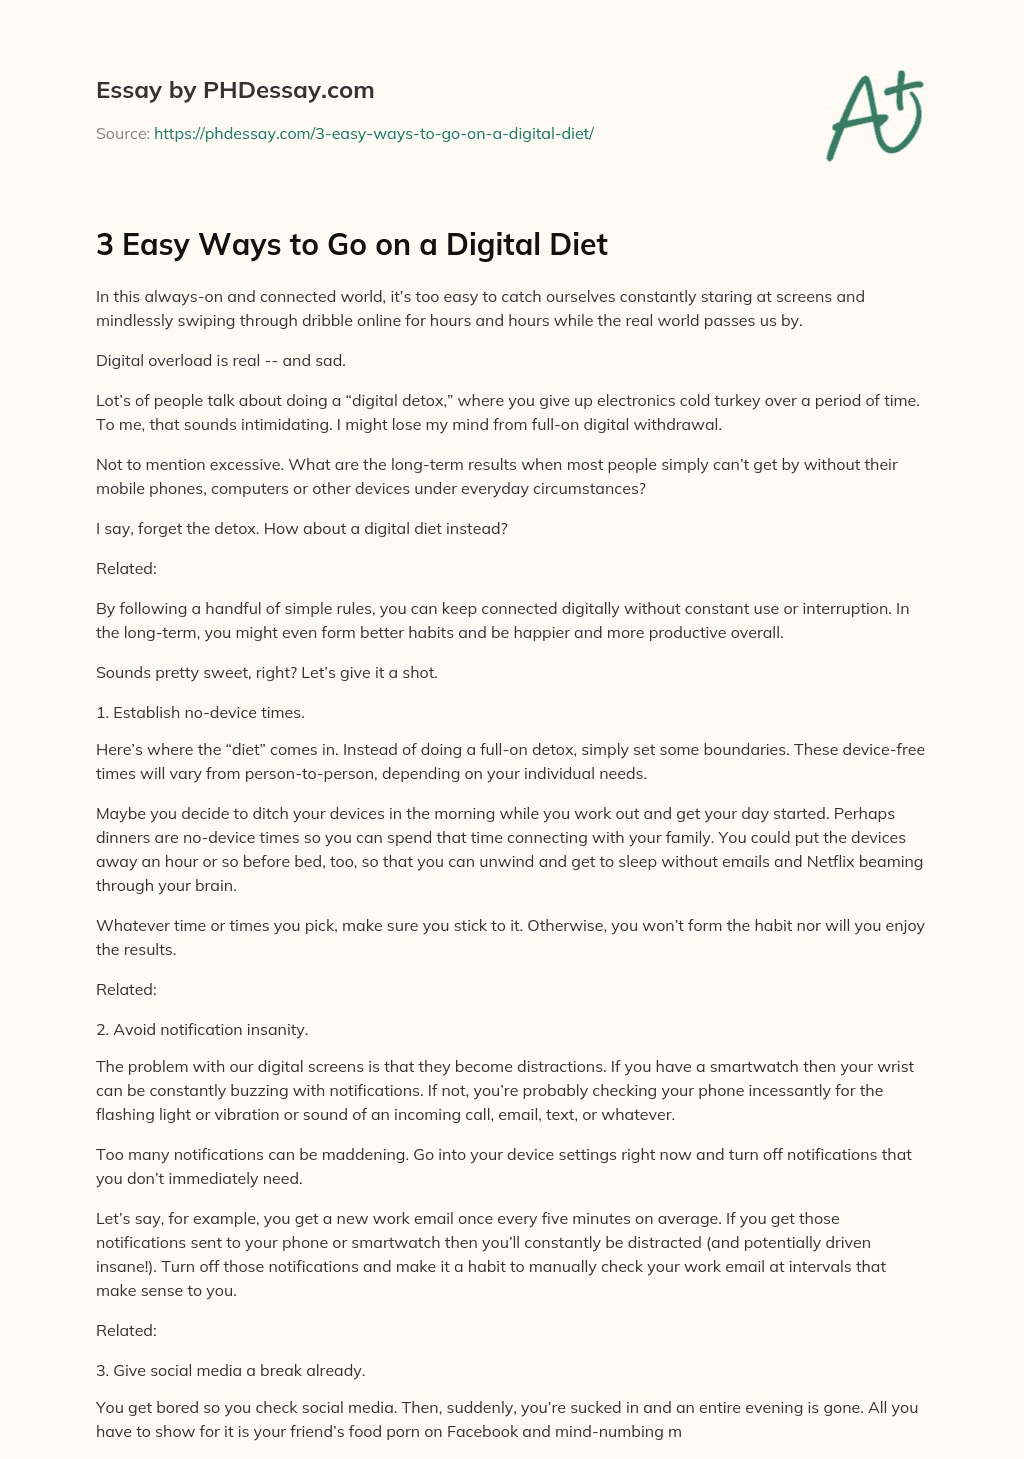 3 Easy Ways to Go on a Digital Diet essay